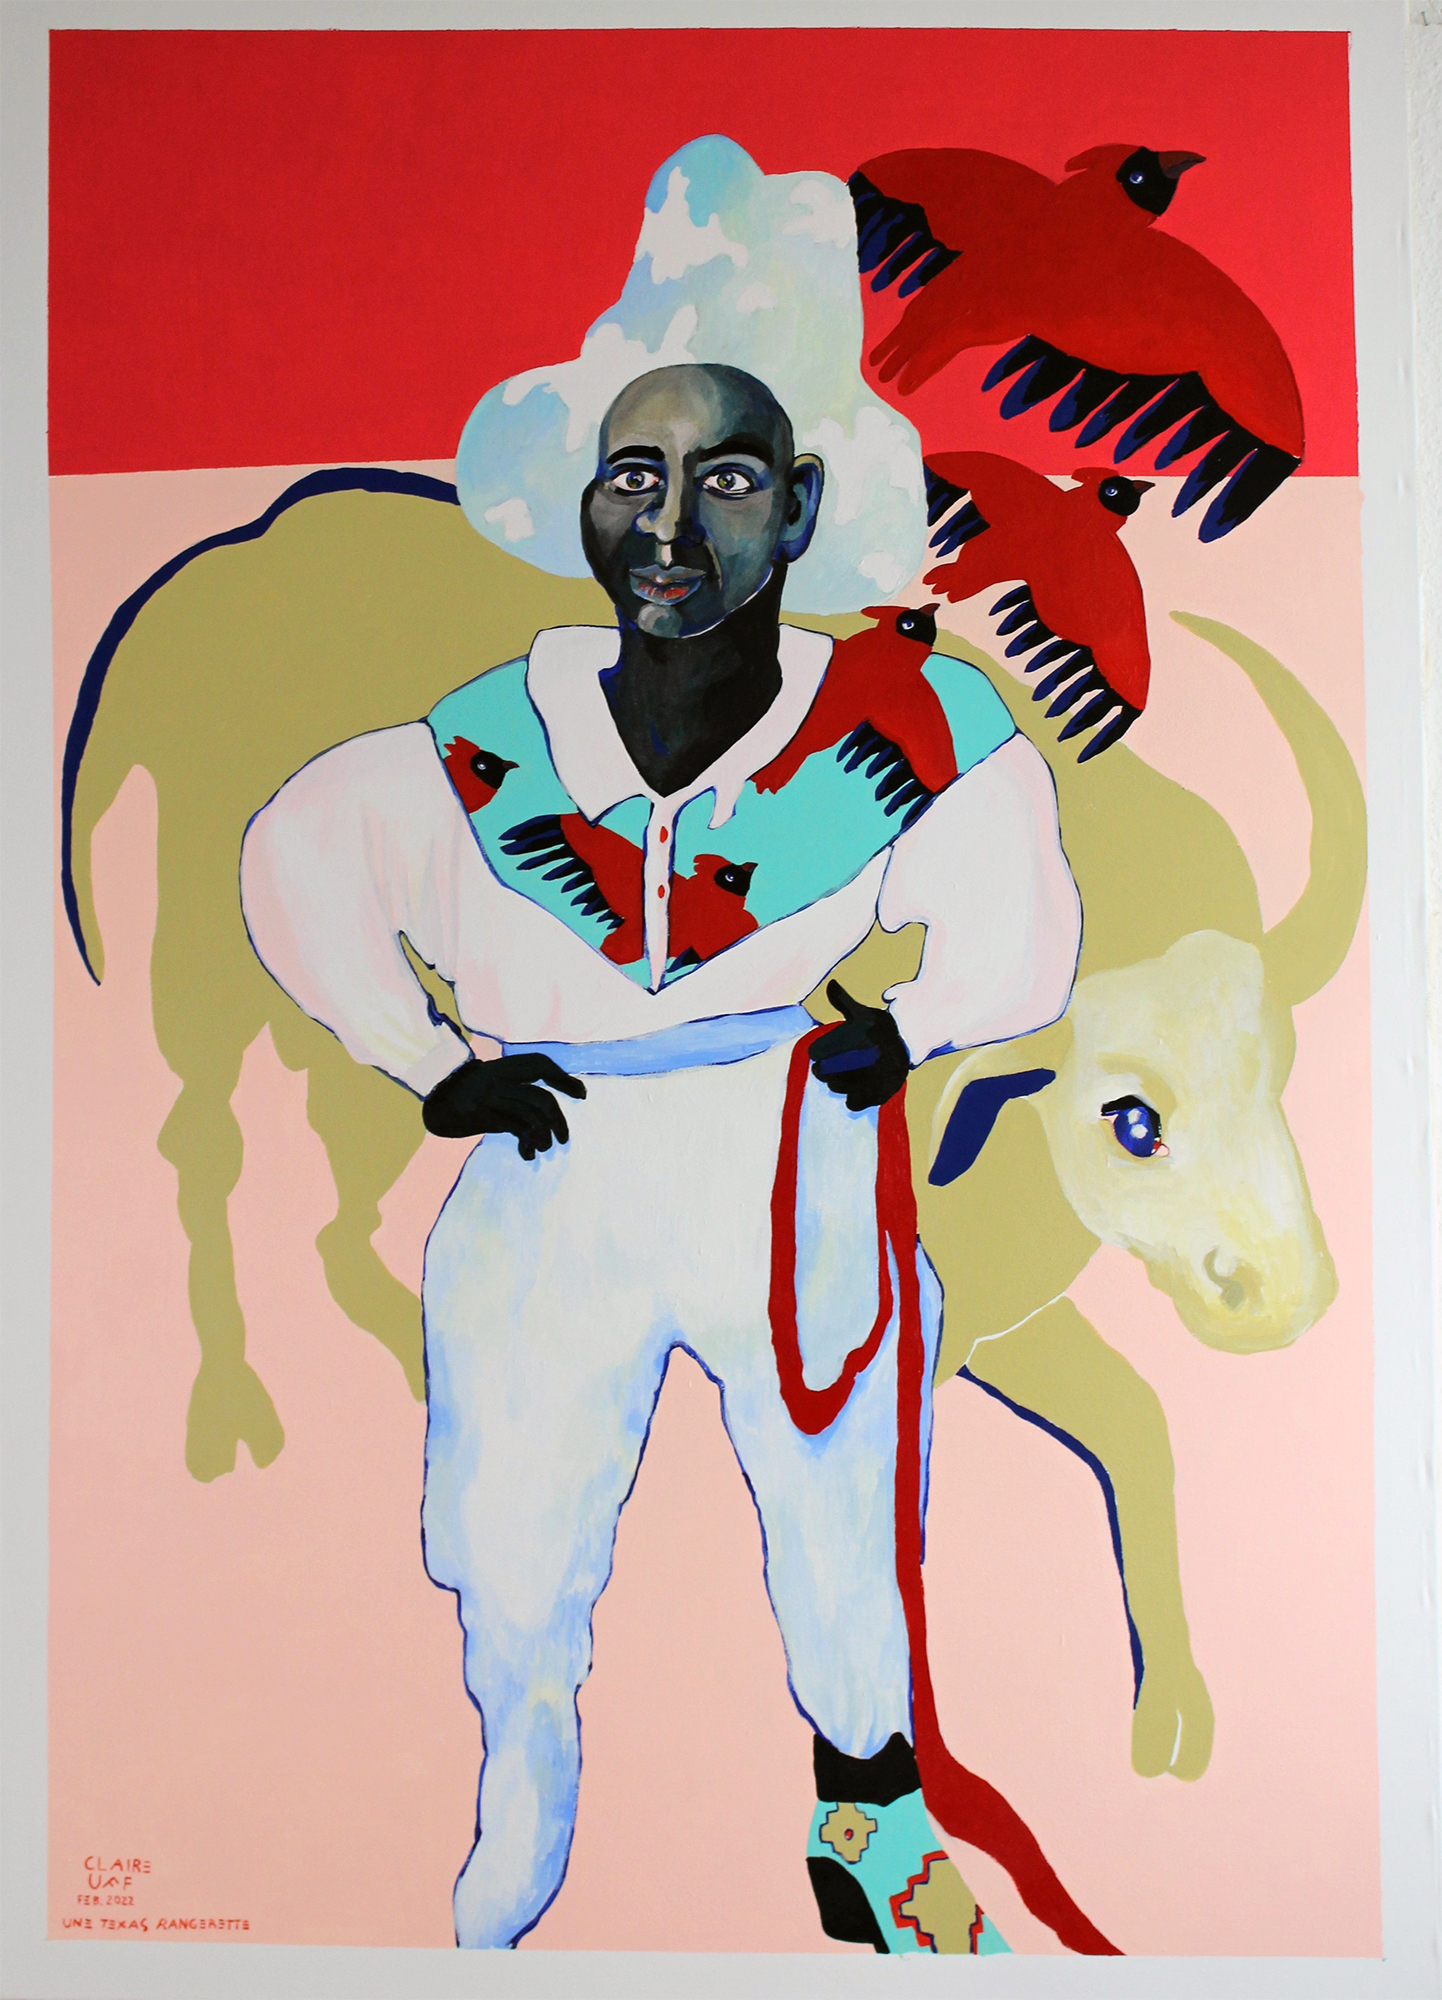 Une Texas Rangerette / Claire Uff / Malerei / Cowboy / Muster / Portrait / Hut / Cowboyhut / bird / Vogel / Texas / cow / Rind / together / BLM / Cowboyhut / black / contemporaryart / contemporarypainting / art / berlin artist / painting / acrylic / Pink / rosa / Rot / Königsblau